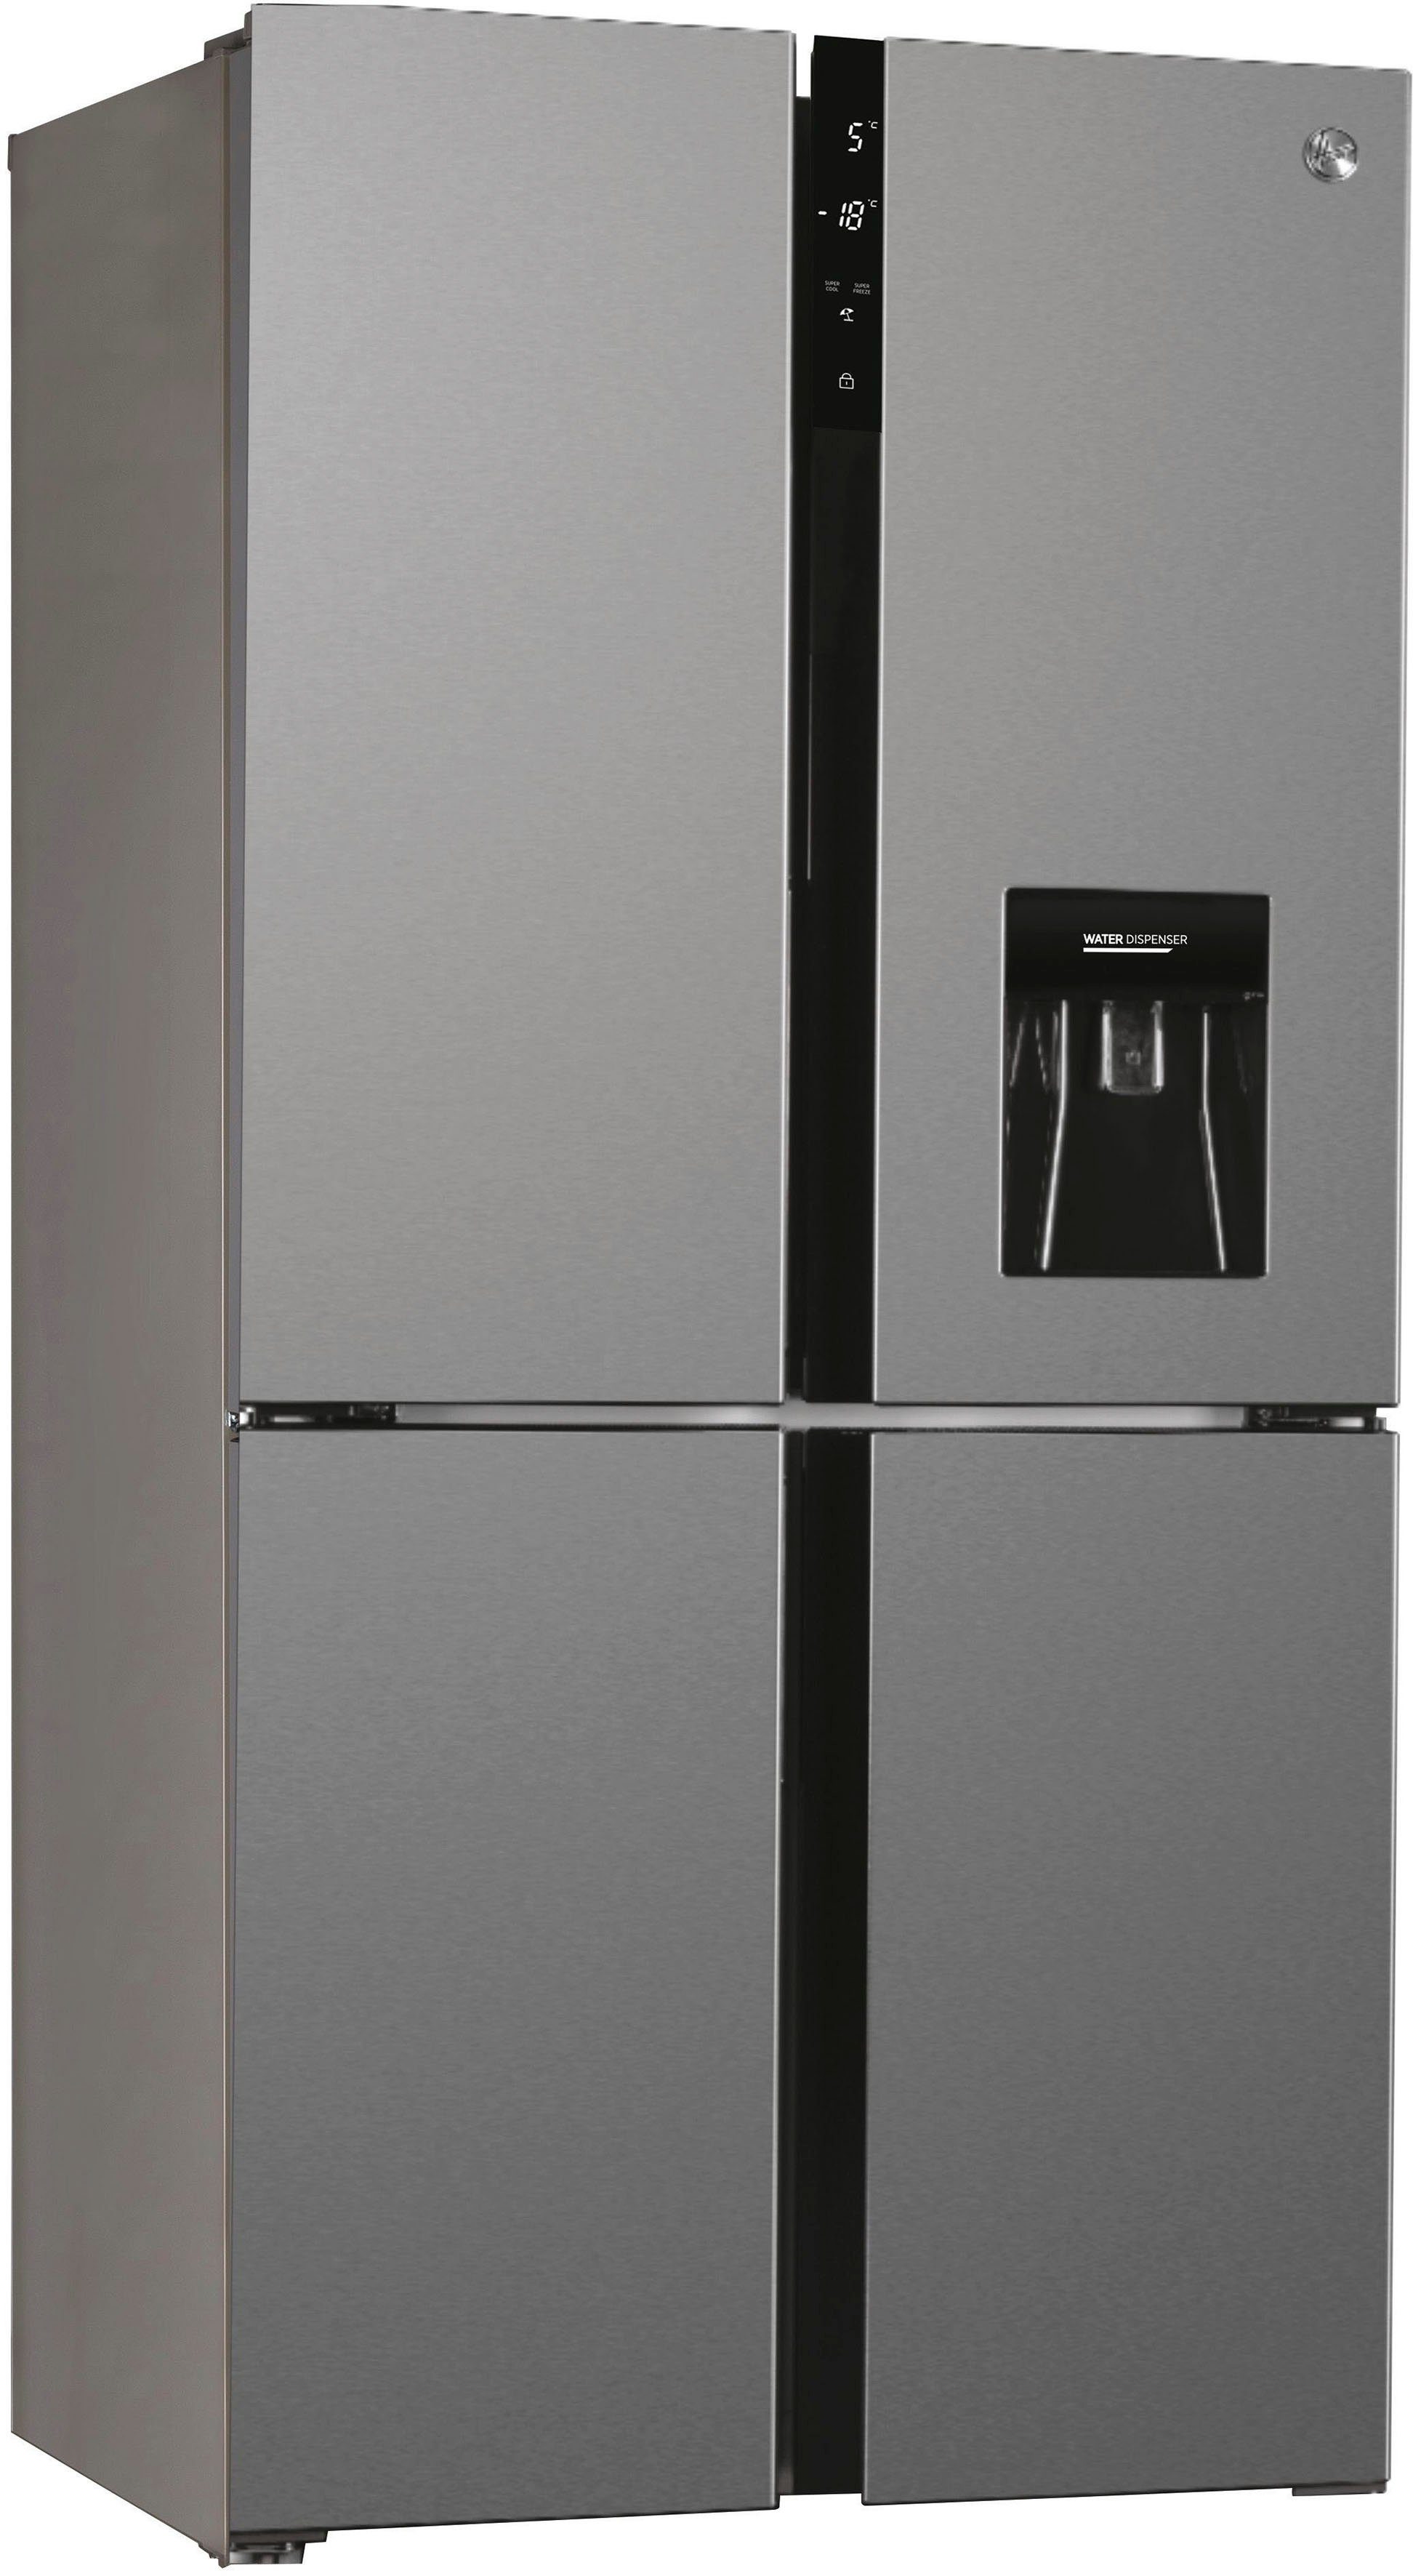 Hoover Side-by-Side HSC818EXWD, 183 cm hoch, 83,6 cm breit | Side-by-Side Kühlschränke